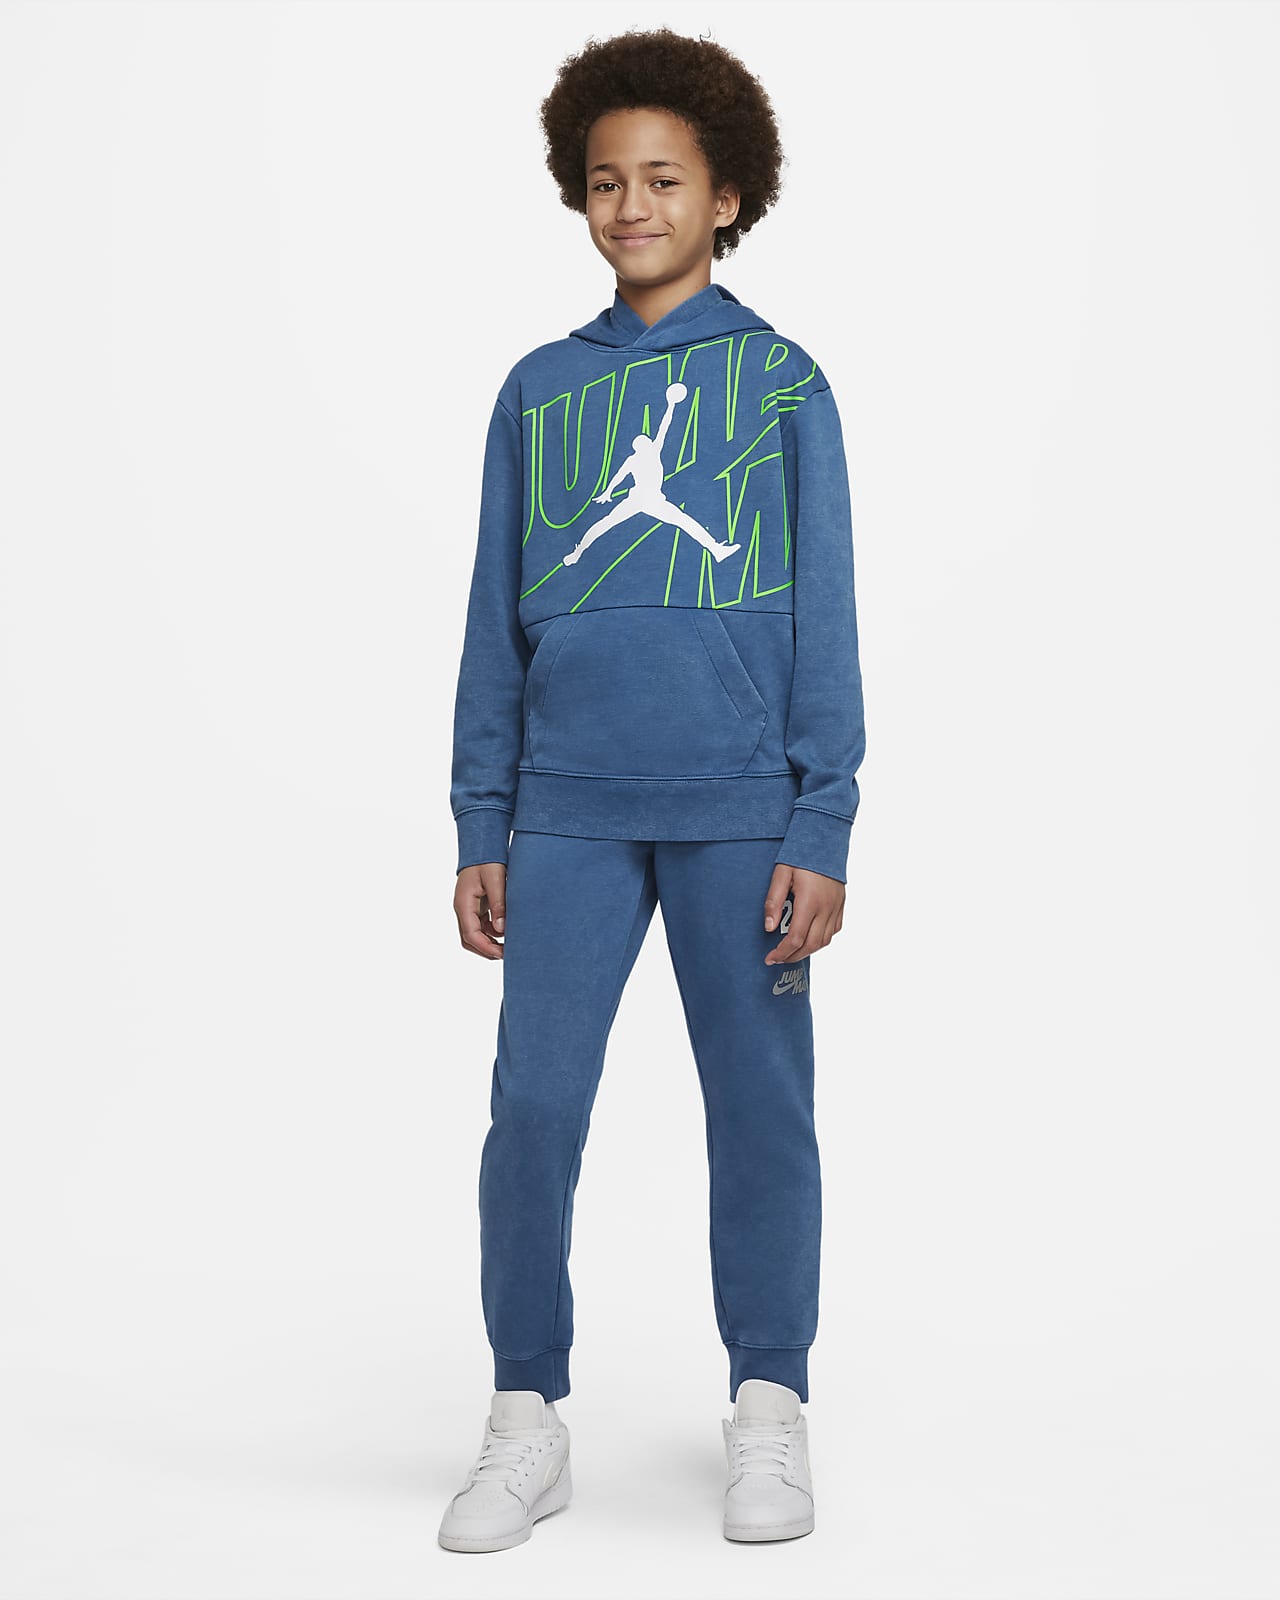 Comprar Sudadera Niño/a Nike Jordan Jumpman 95B910-R78